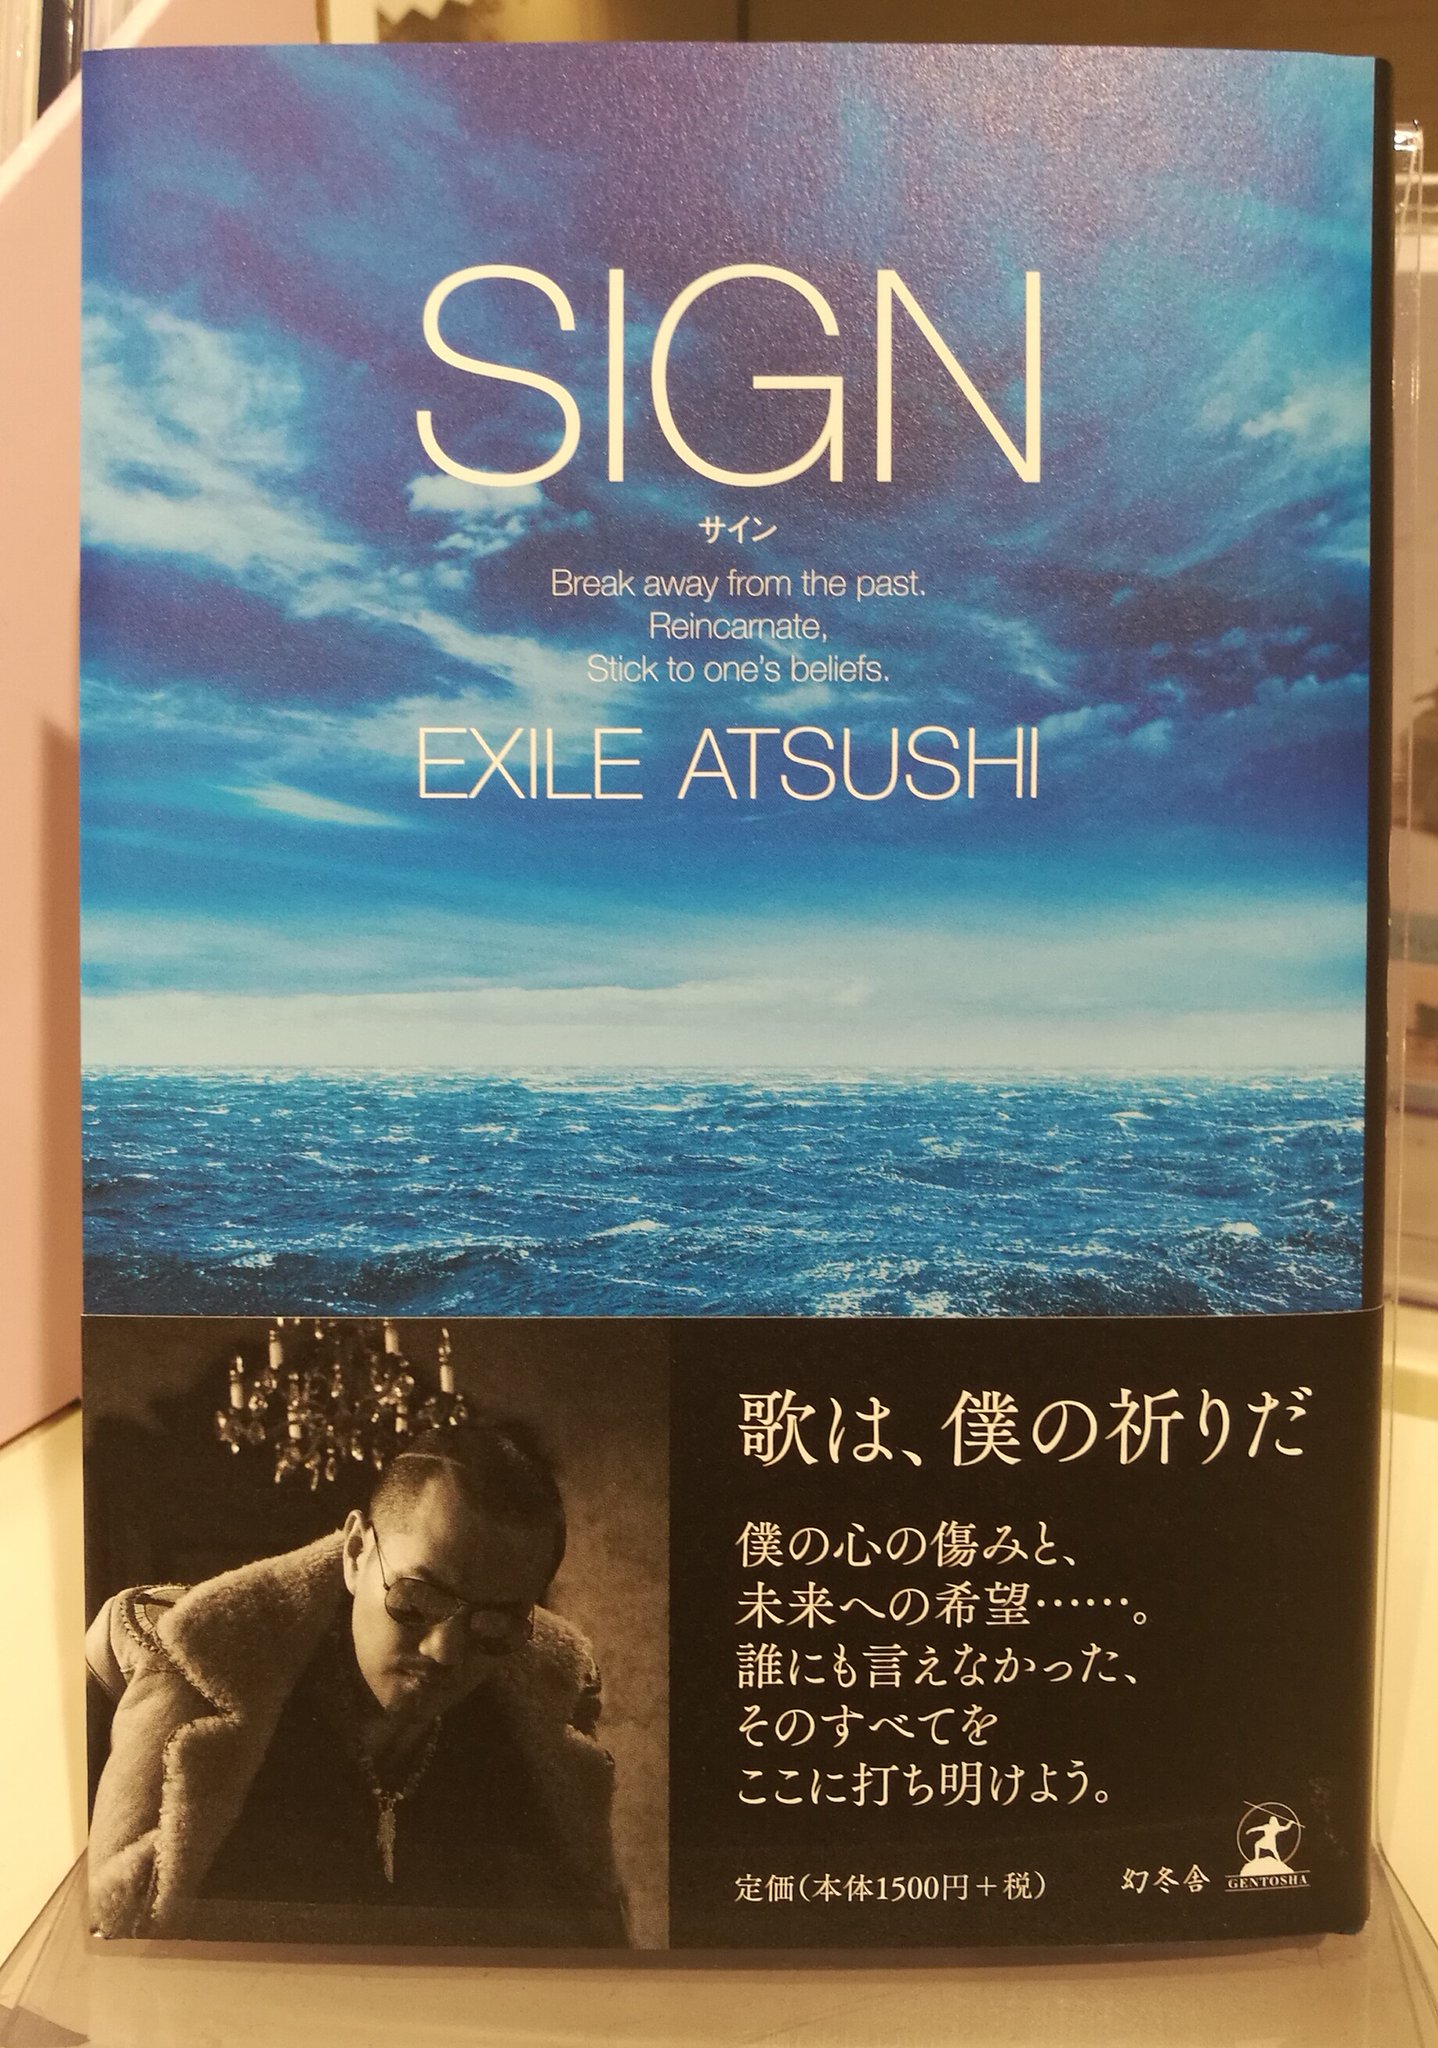 Hmv Books Hakata V Twitter 本日入荷 Exile Atsushi著 Sign サイン 歌は 僕の祈りだ Exileデビュー周年を控え 40歳を迎えた孤高のボーカリスト Exile Atsushi 初の著書 天音 から7年半ぶり 待望の最新エッセイが登場 Exile Atsushi Sign